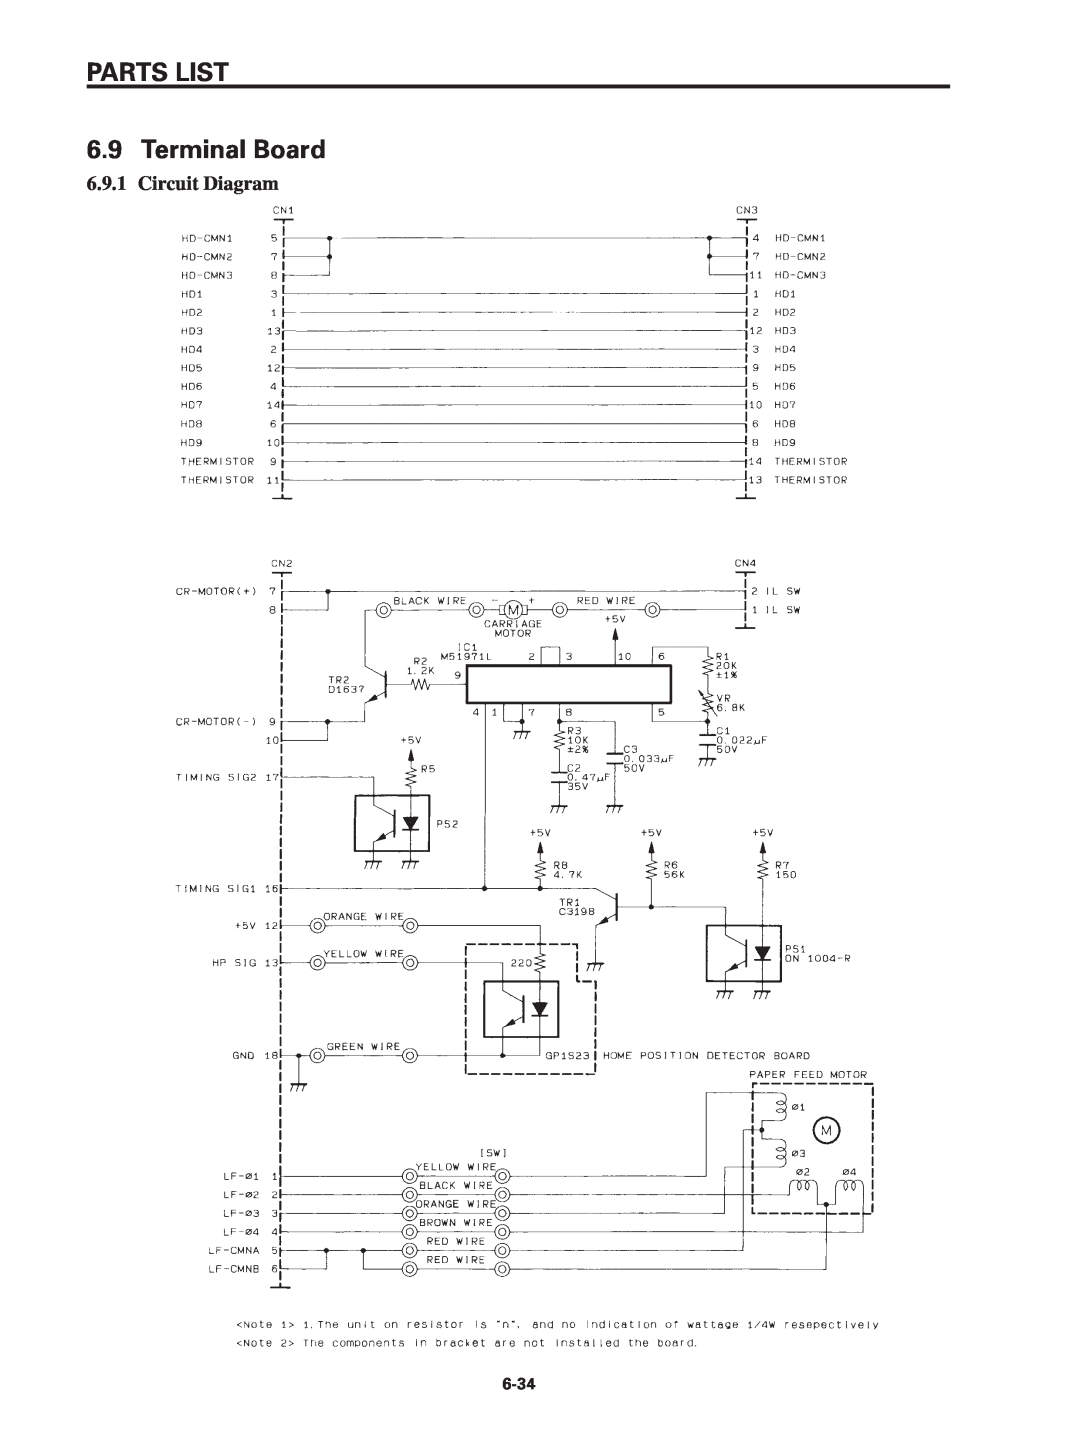 Star Micronics SP320S technical manual PARTS LIST 6.9 Terminal Board, Circuit Diagram 